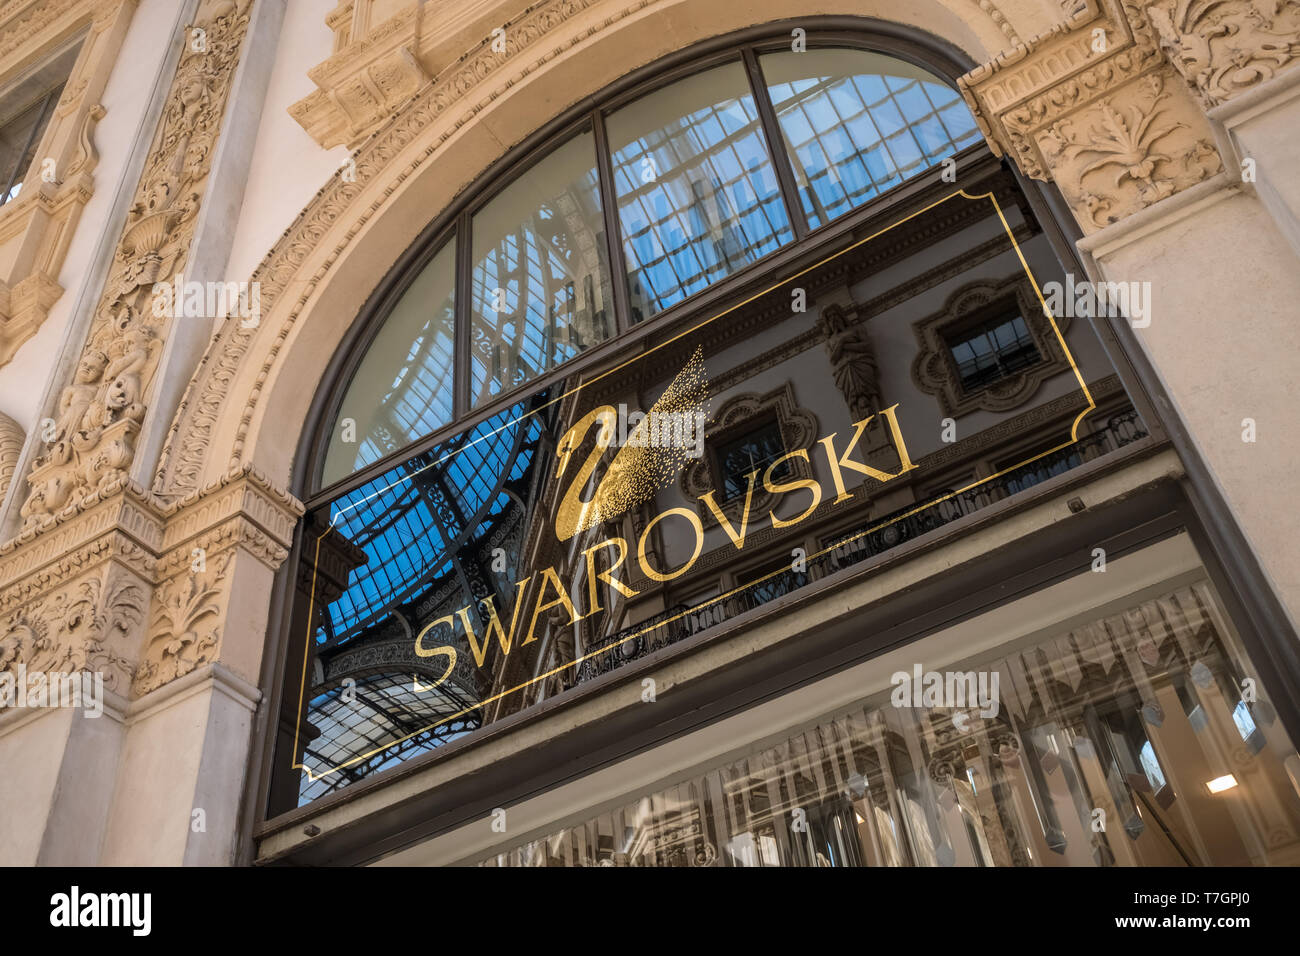 Swarovski store, Galleria Vittorio Emanuele II shopping arcade interno, Milano, Italia Foto Stock